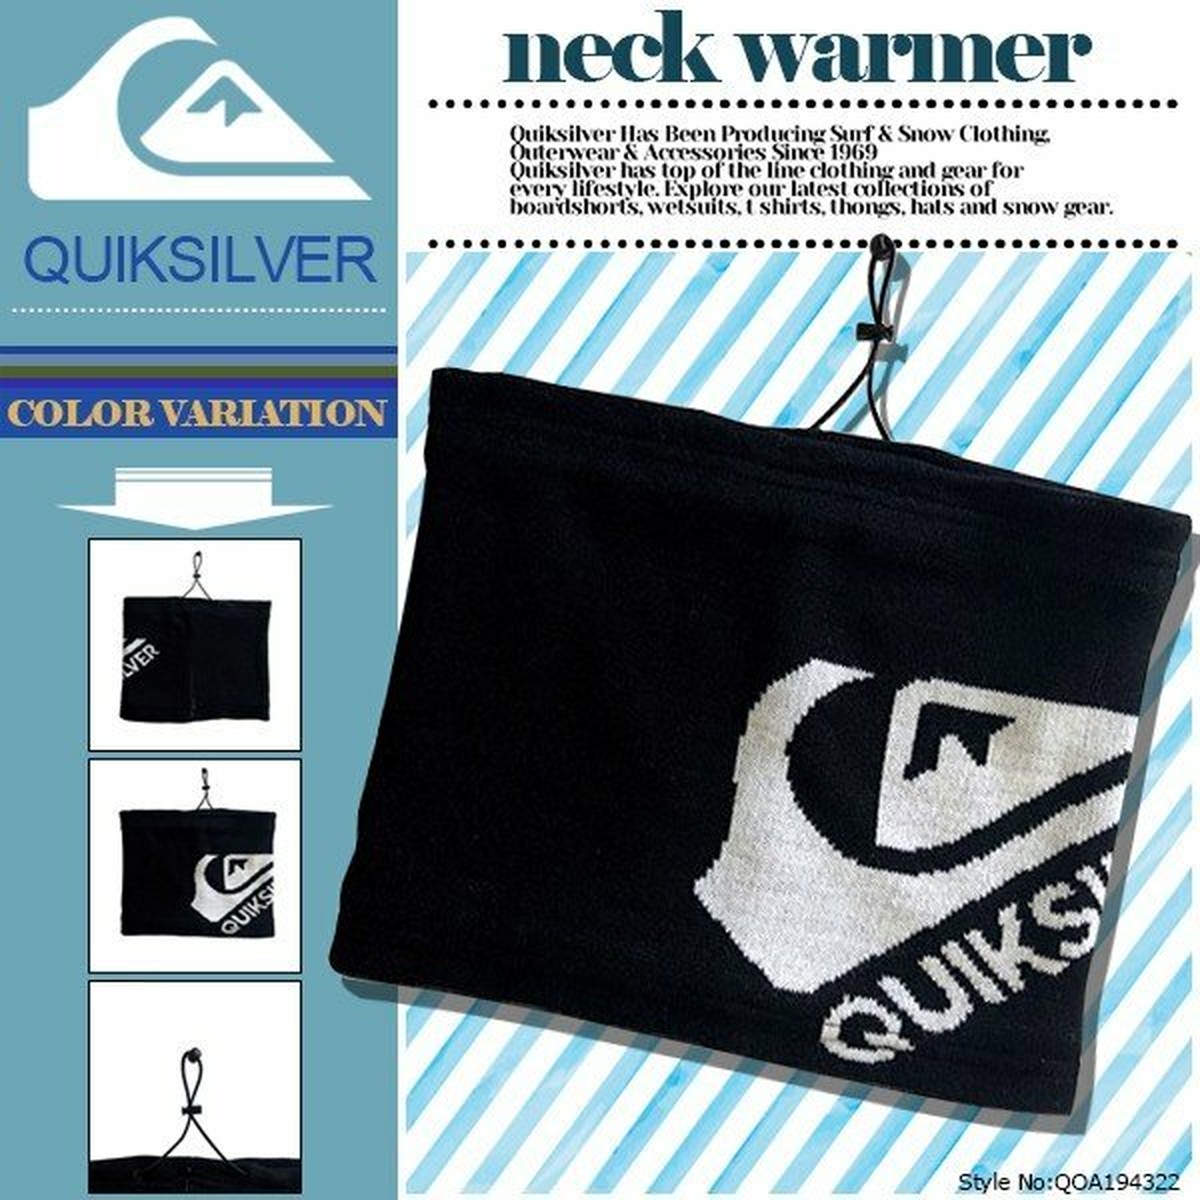 Qoa クイックシルバー ネックウォーマー メンズ ニット フリース 暖か 冬 防寒 人気ブランド ブラック 黒 Mw Logo Quiksilver Beachdays Okinawa